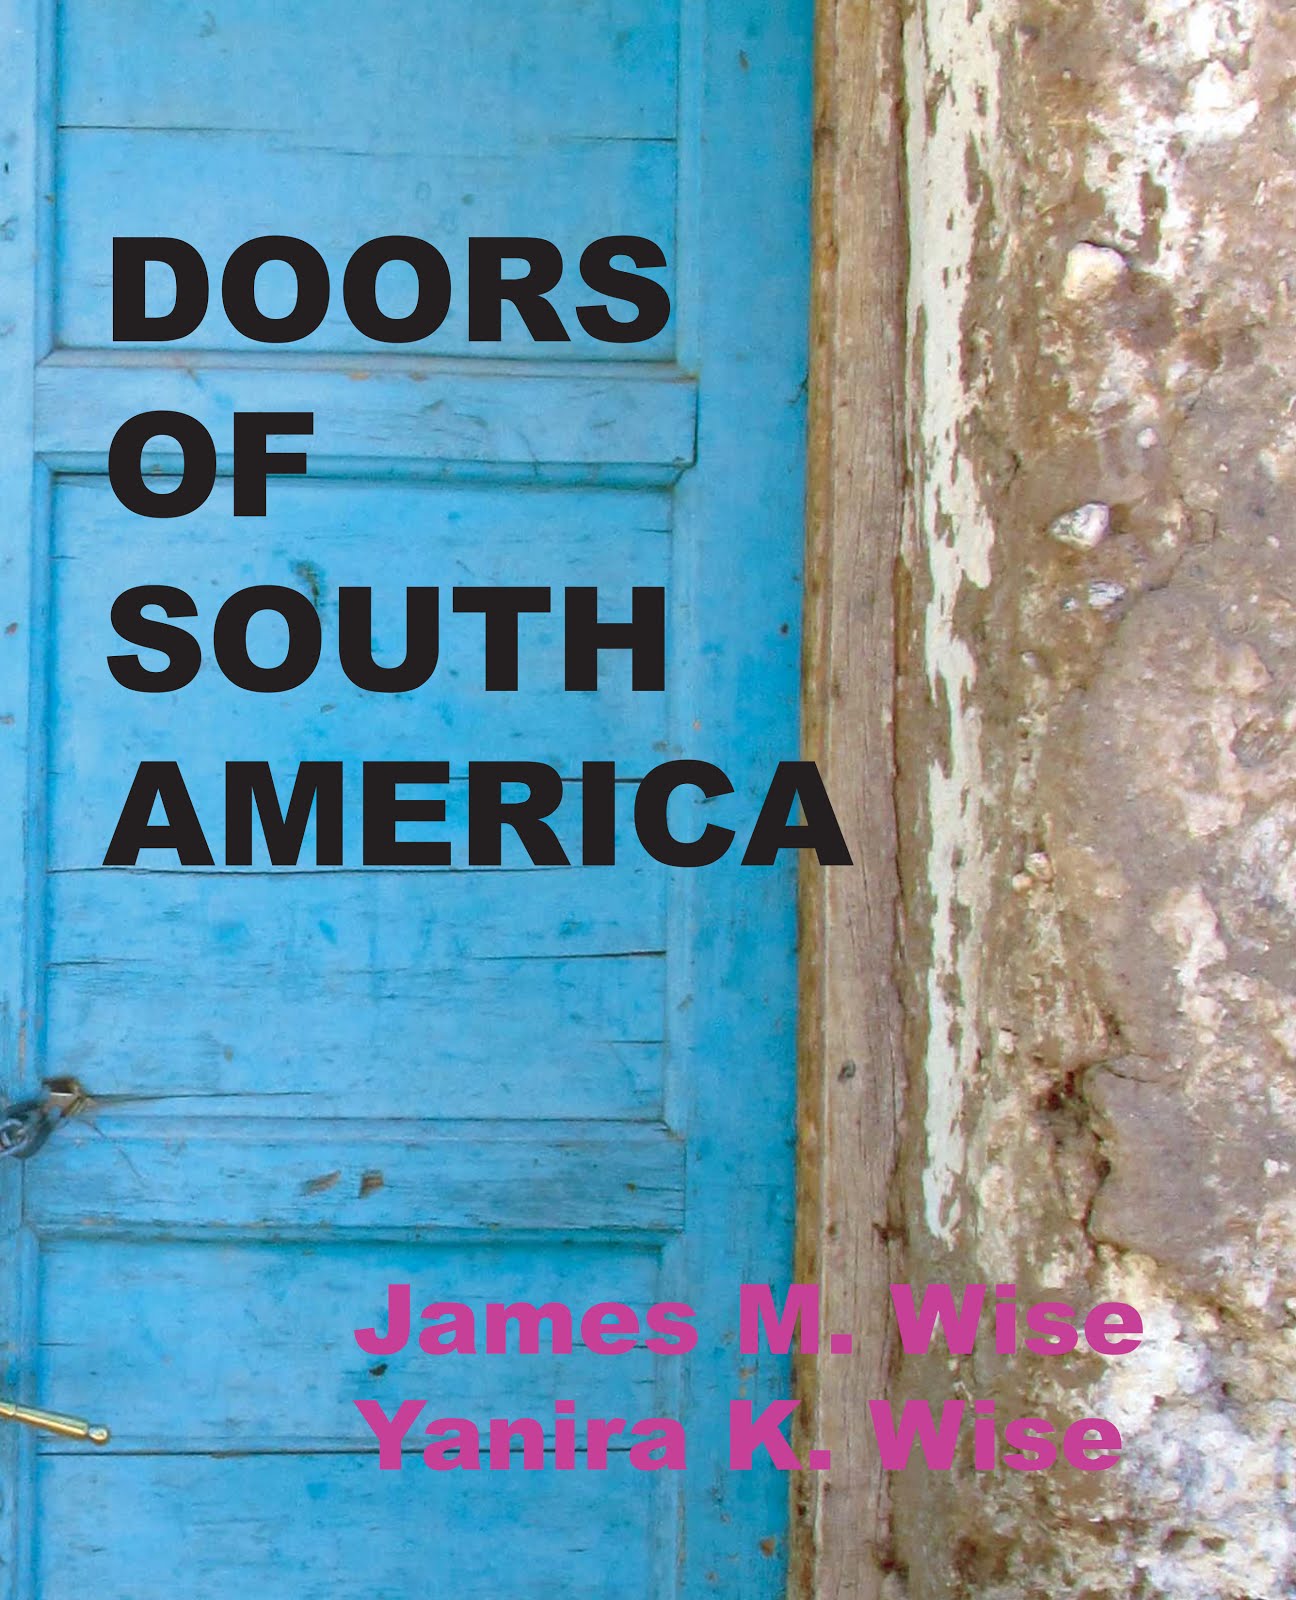 DOORS OF SOUTH AMERICA